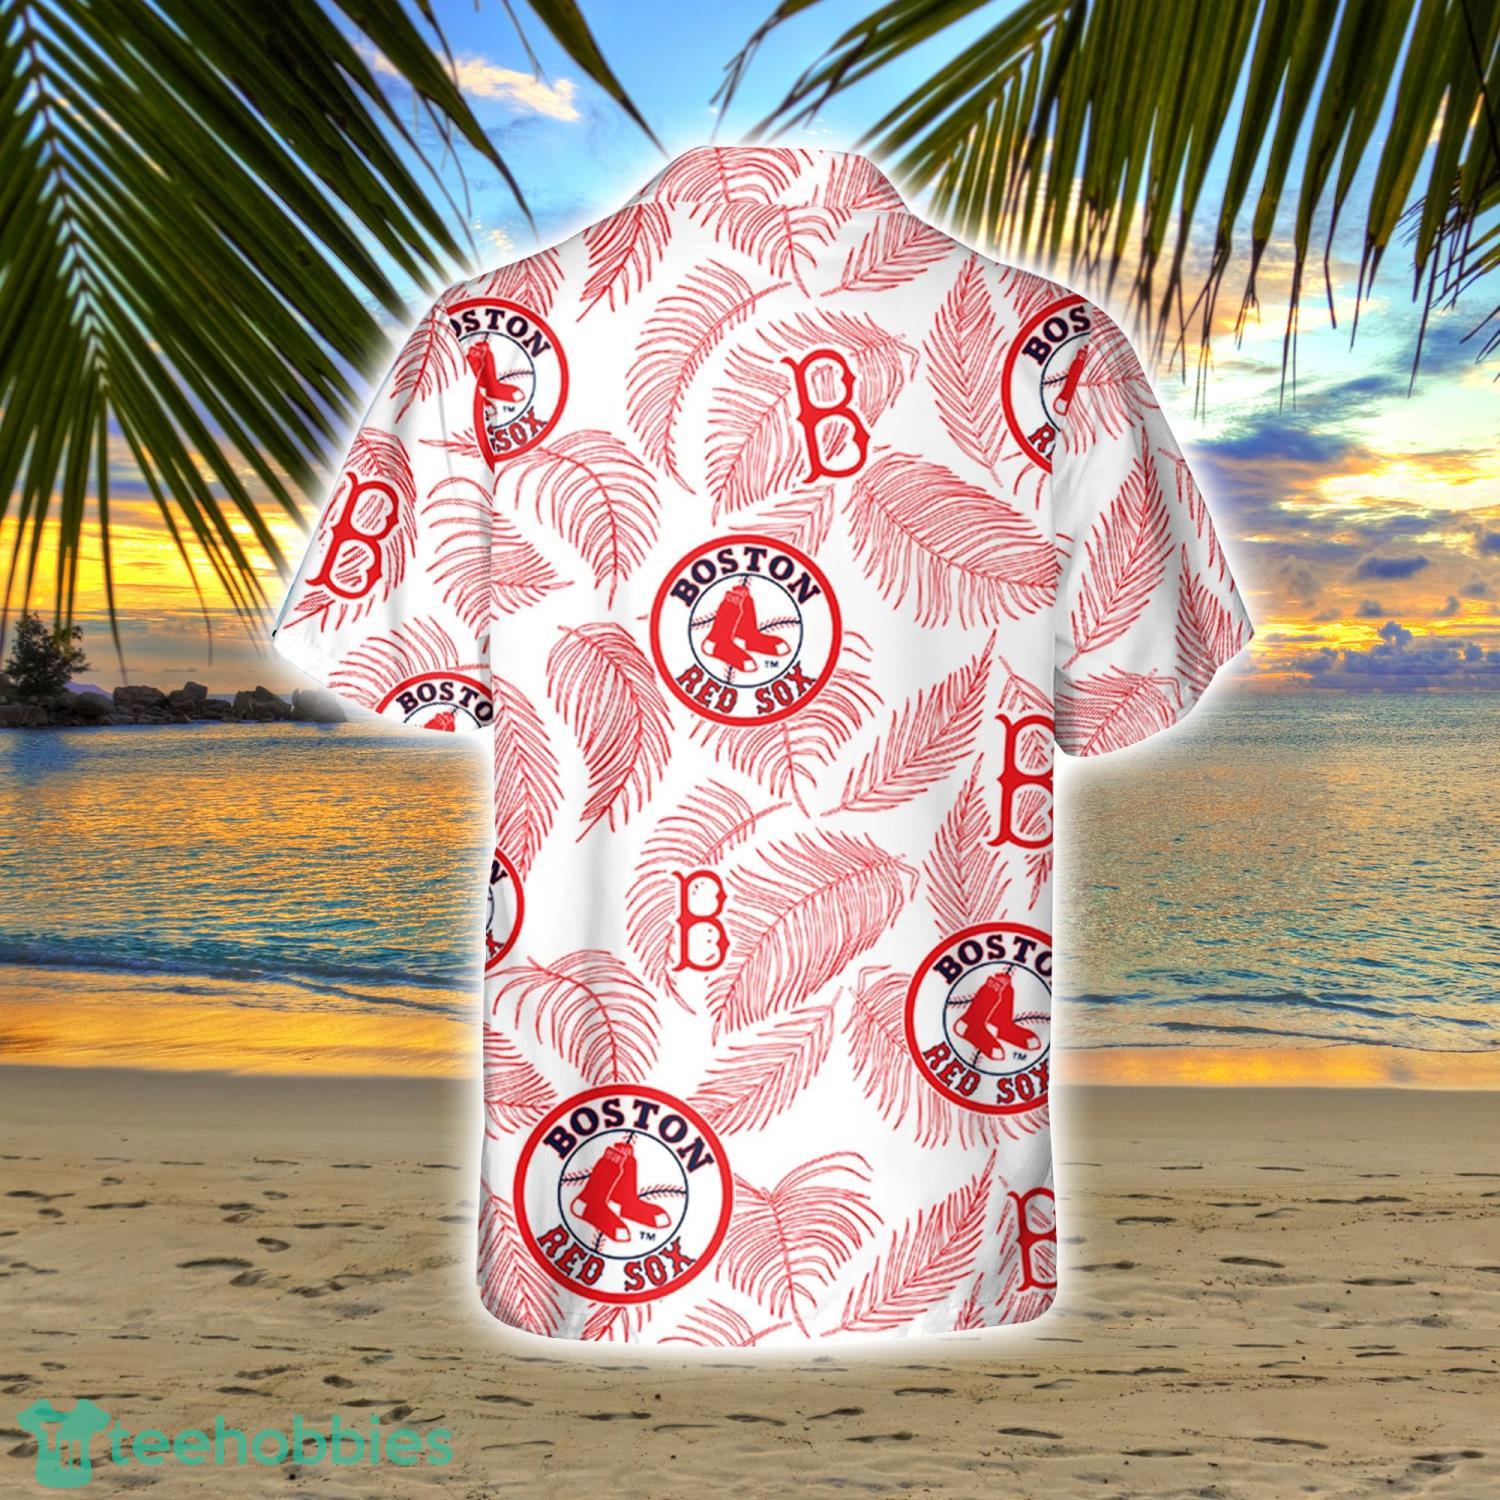 Chicago White Sox Major League Baseball Hawaiian Shirt Best Idea For Fans -  Freedomdesign